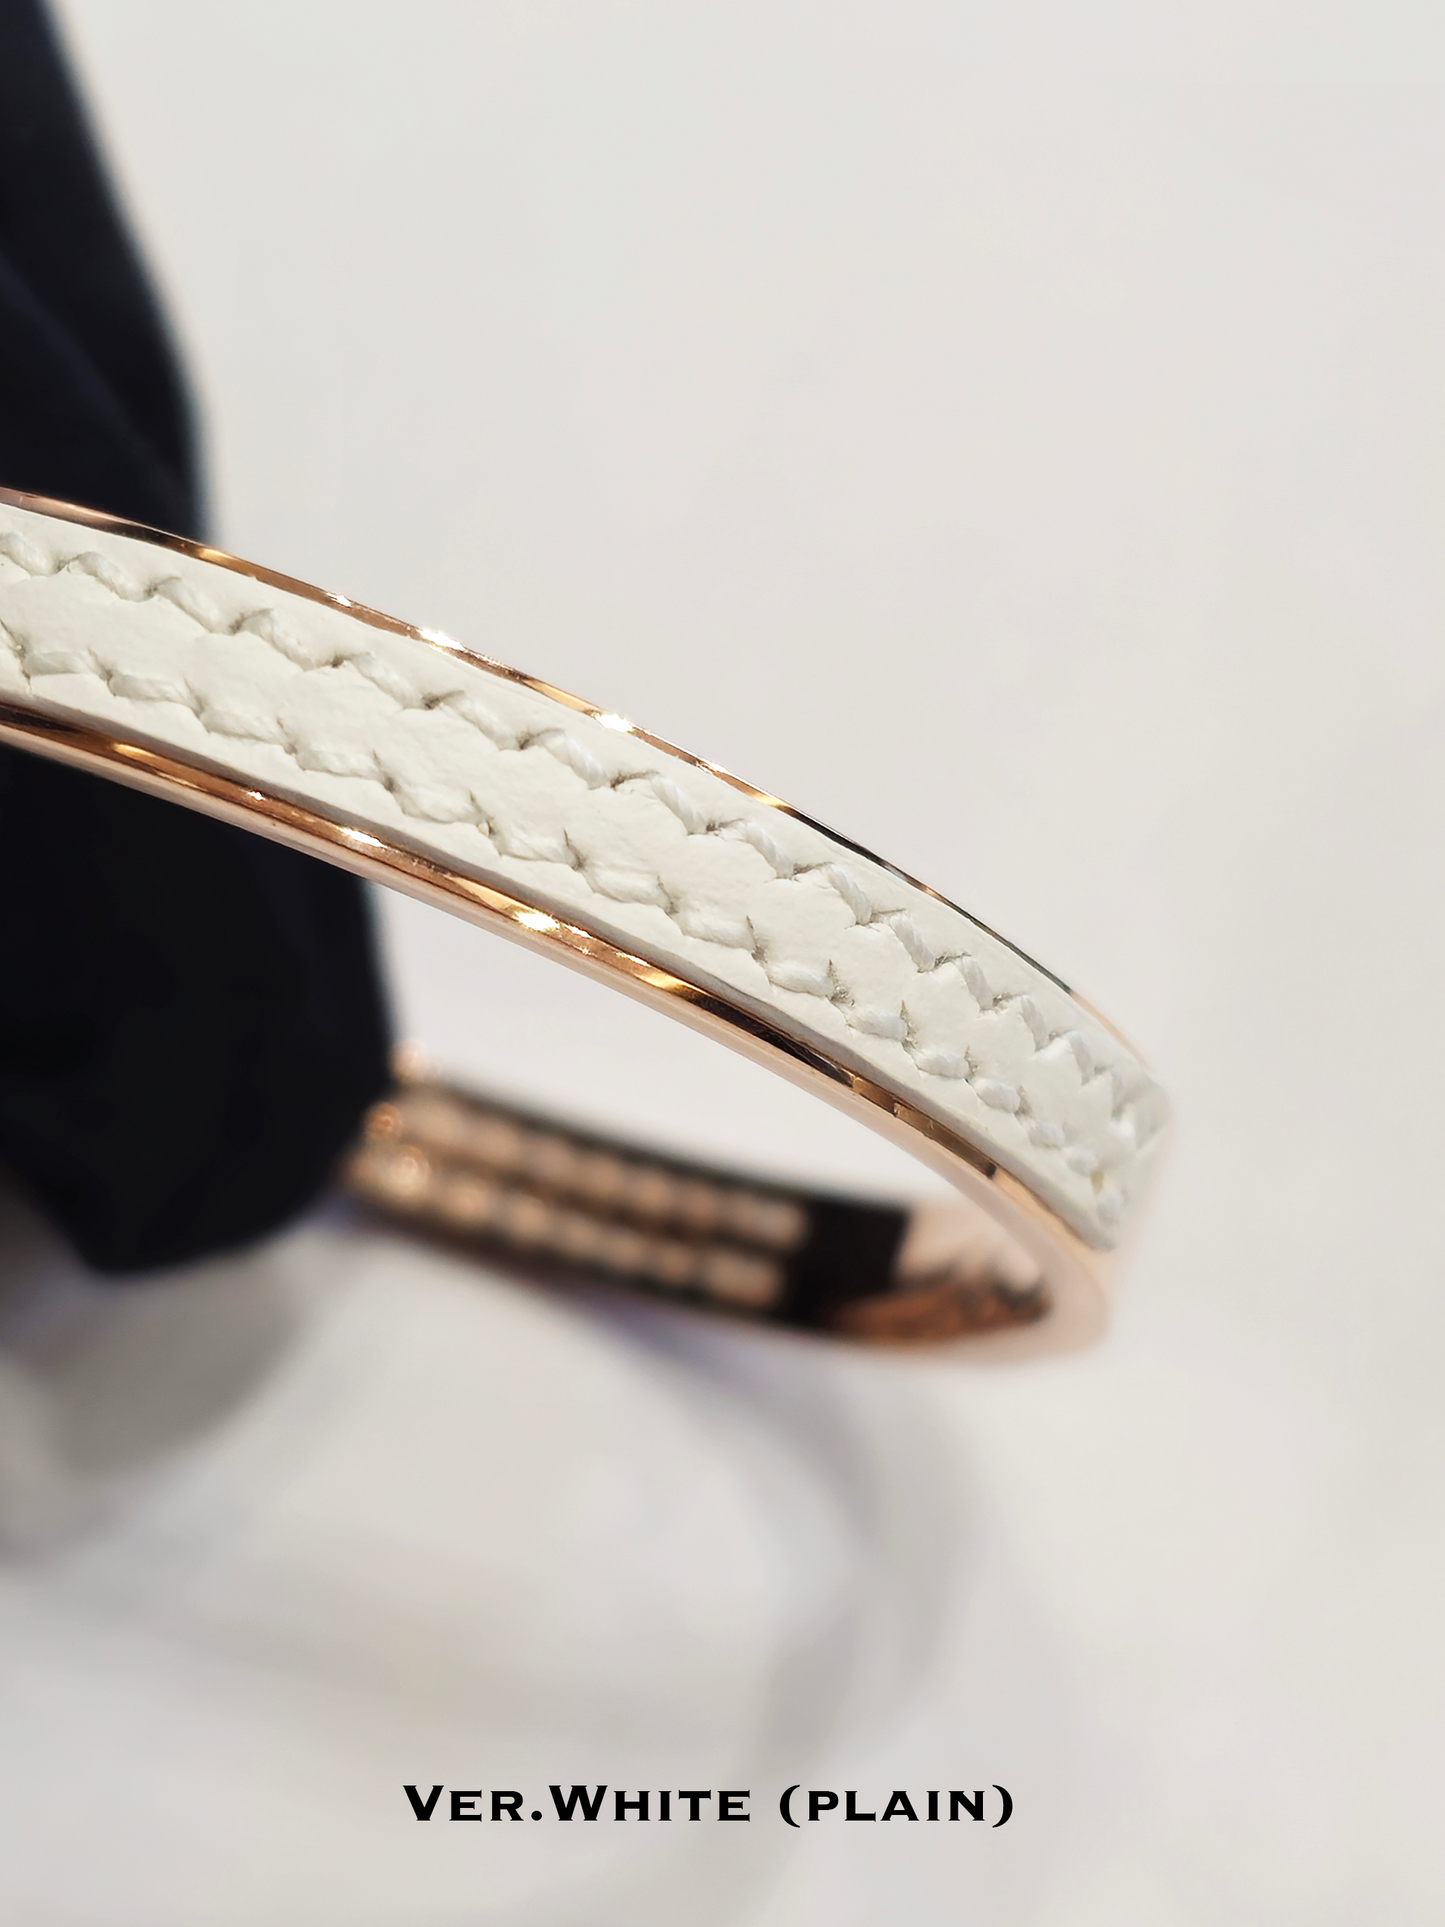 Twined Leather Bracelet, Small, White (plain), Nacre